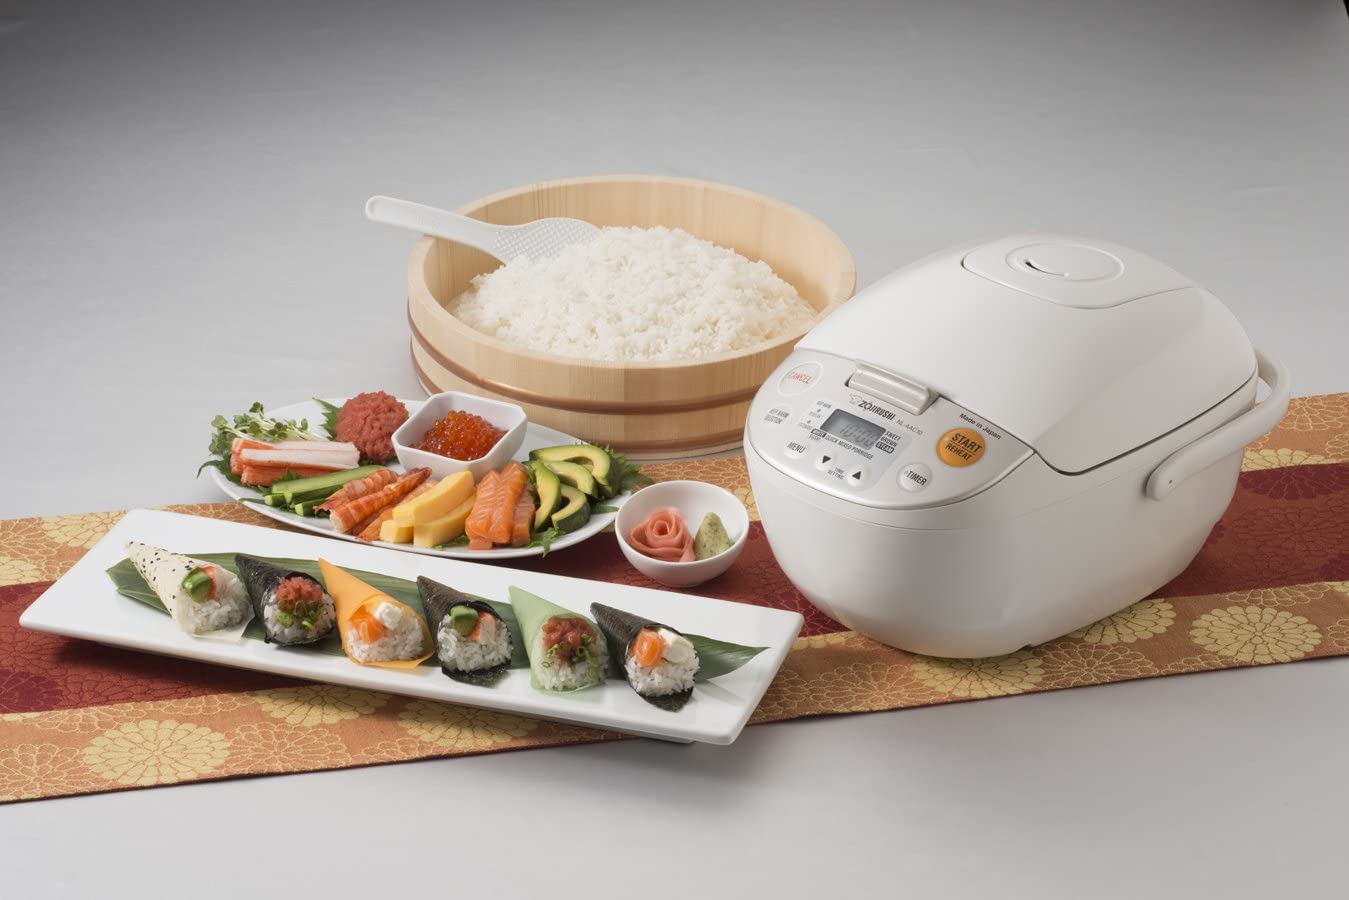 Zojirushi Electronic Rice Cooker/ Warmer 1.8 Ltr- Beige